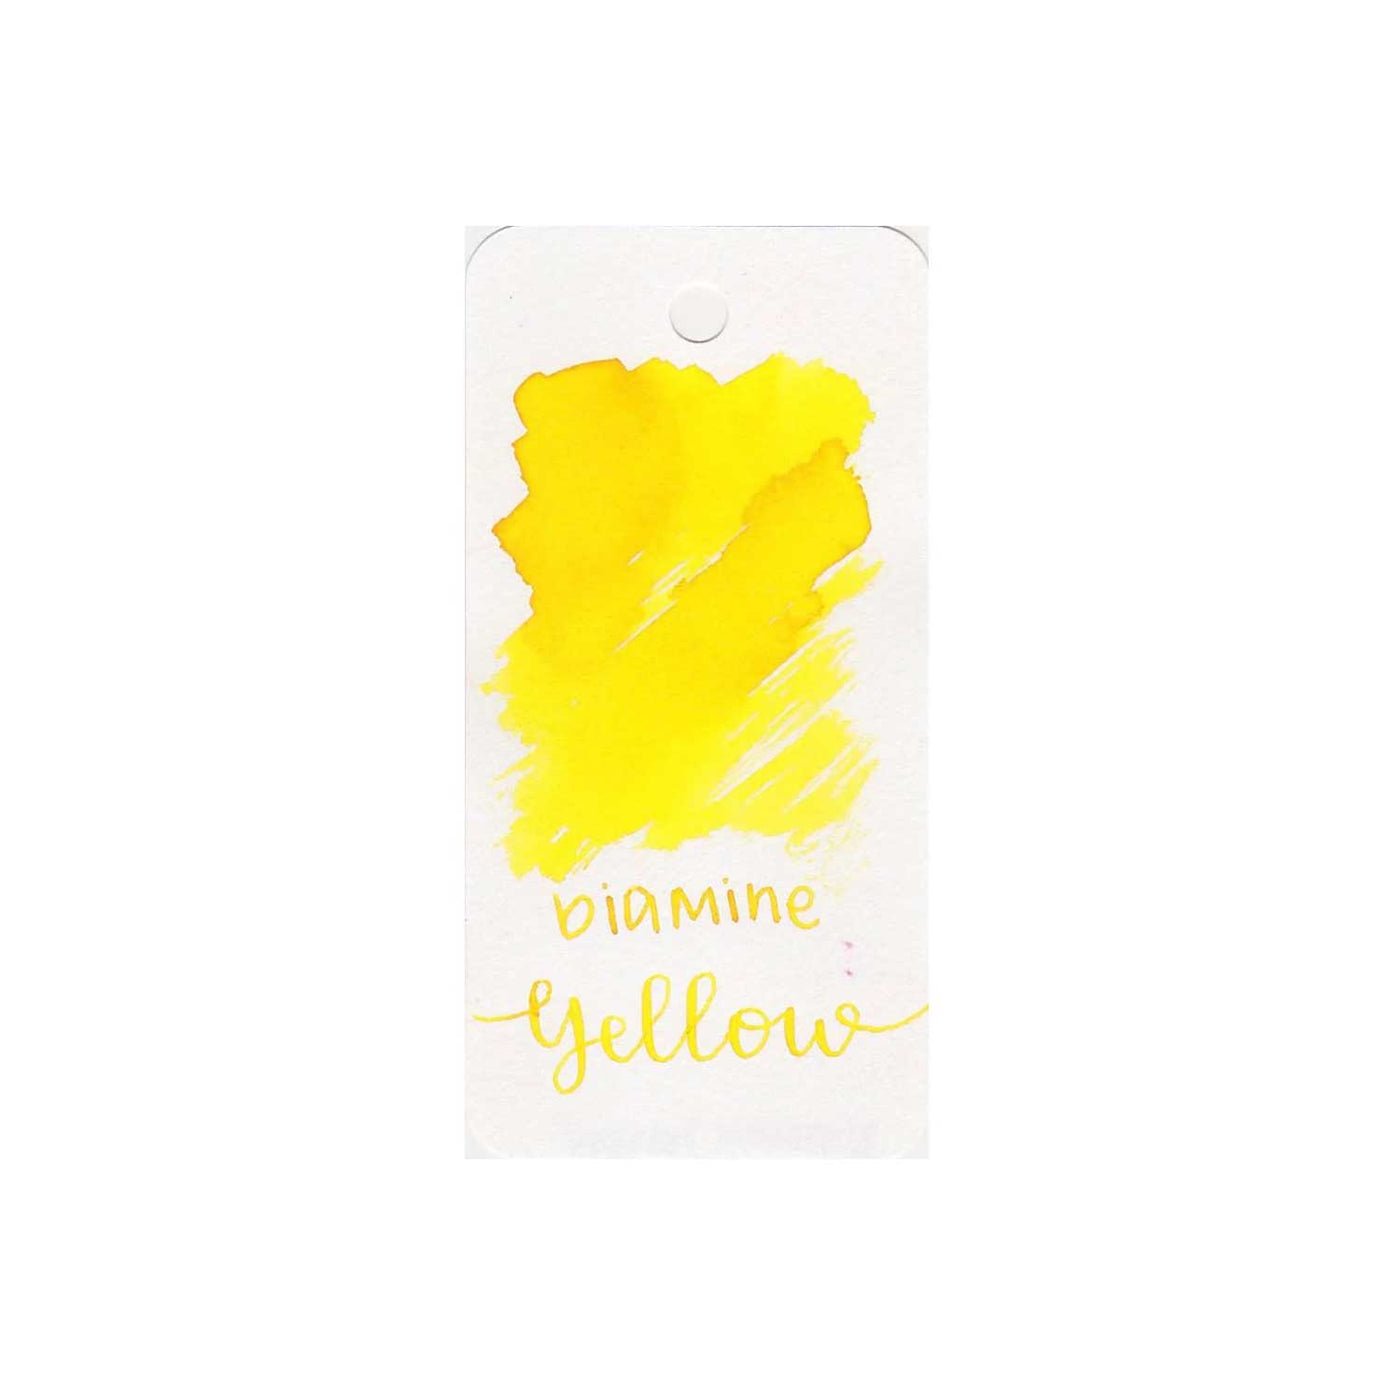 Diamine Yellow Ink Bottle - 80ml 2